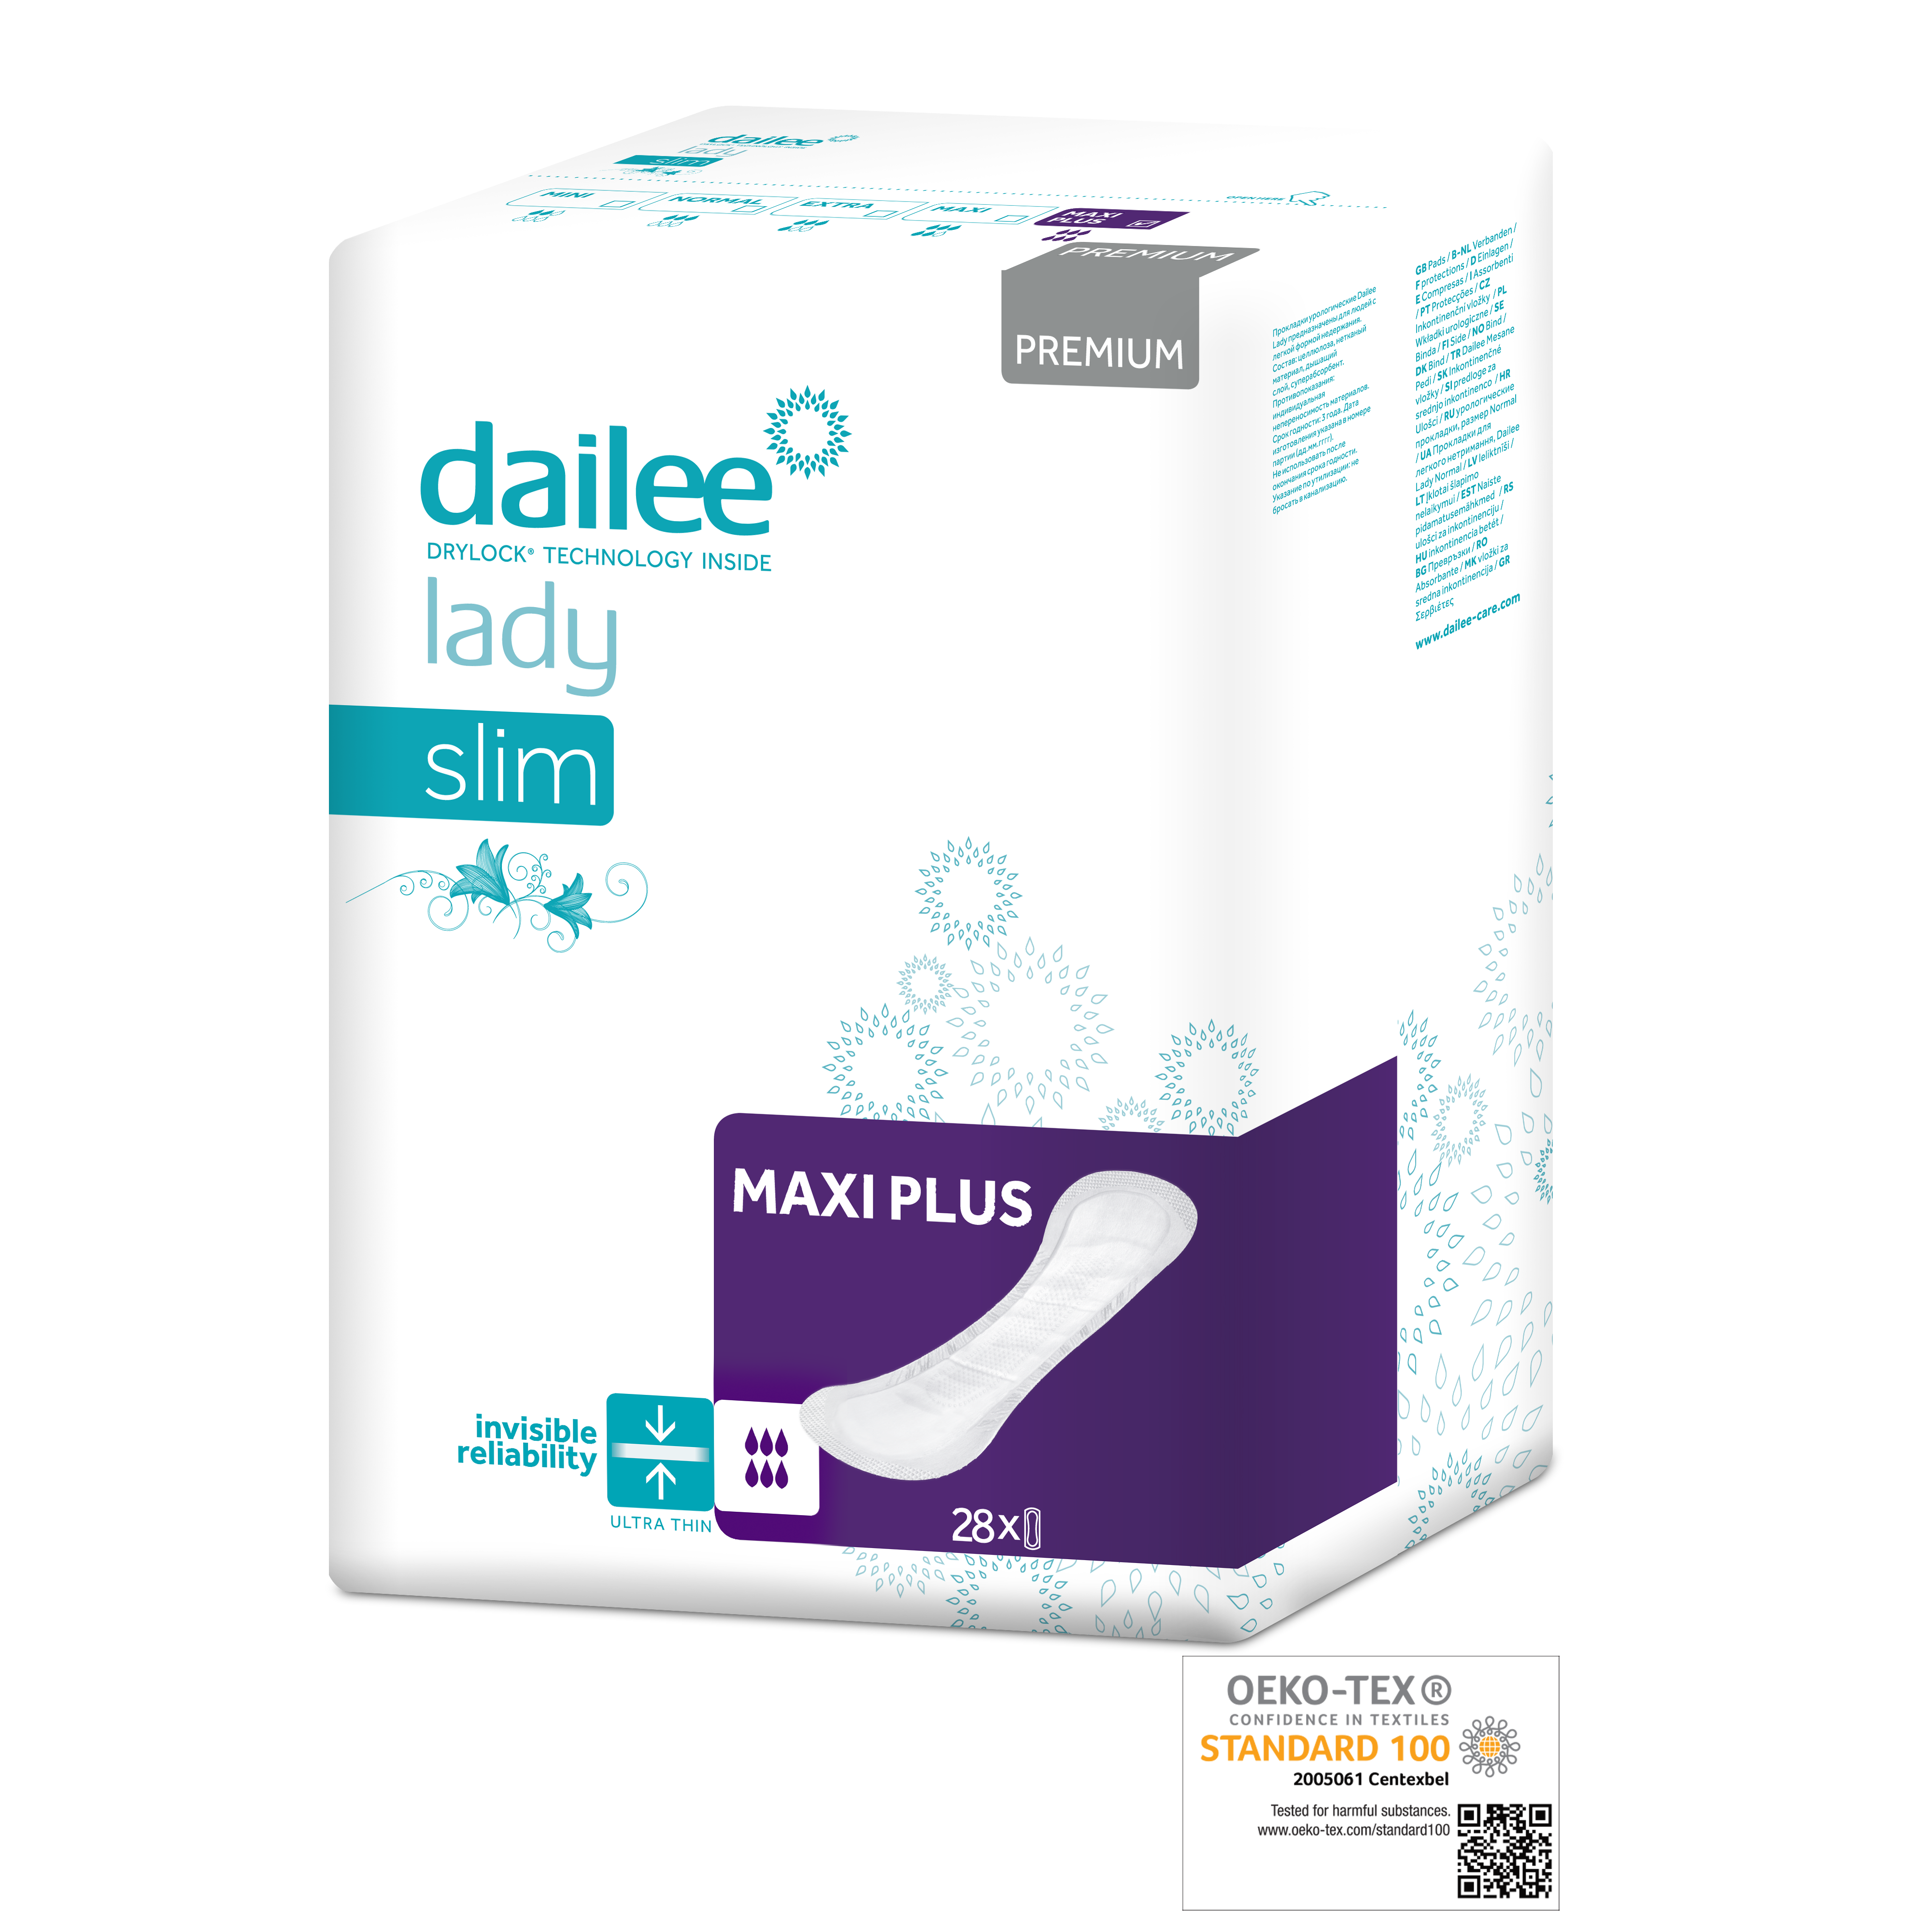 Dailee Lady Slim Premium Maxiplus